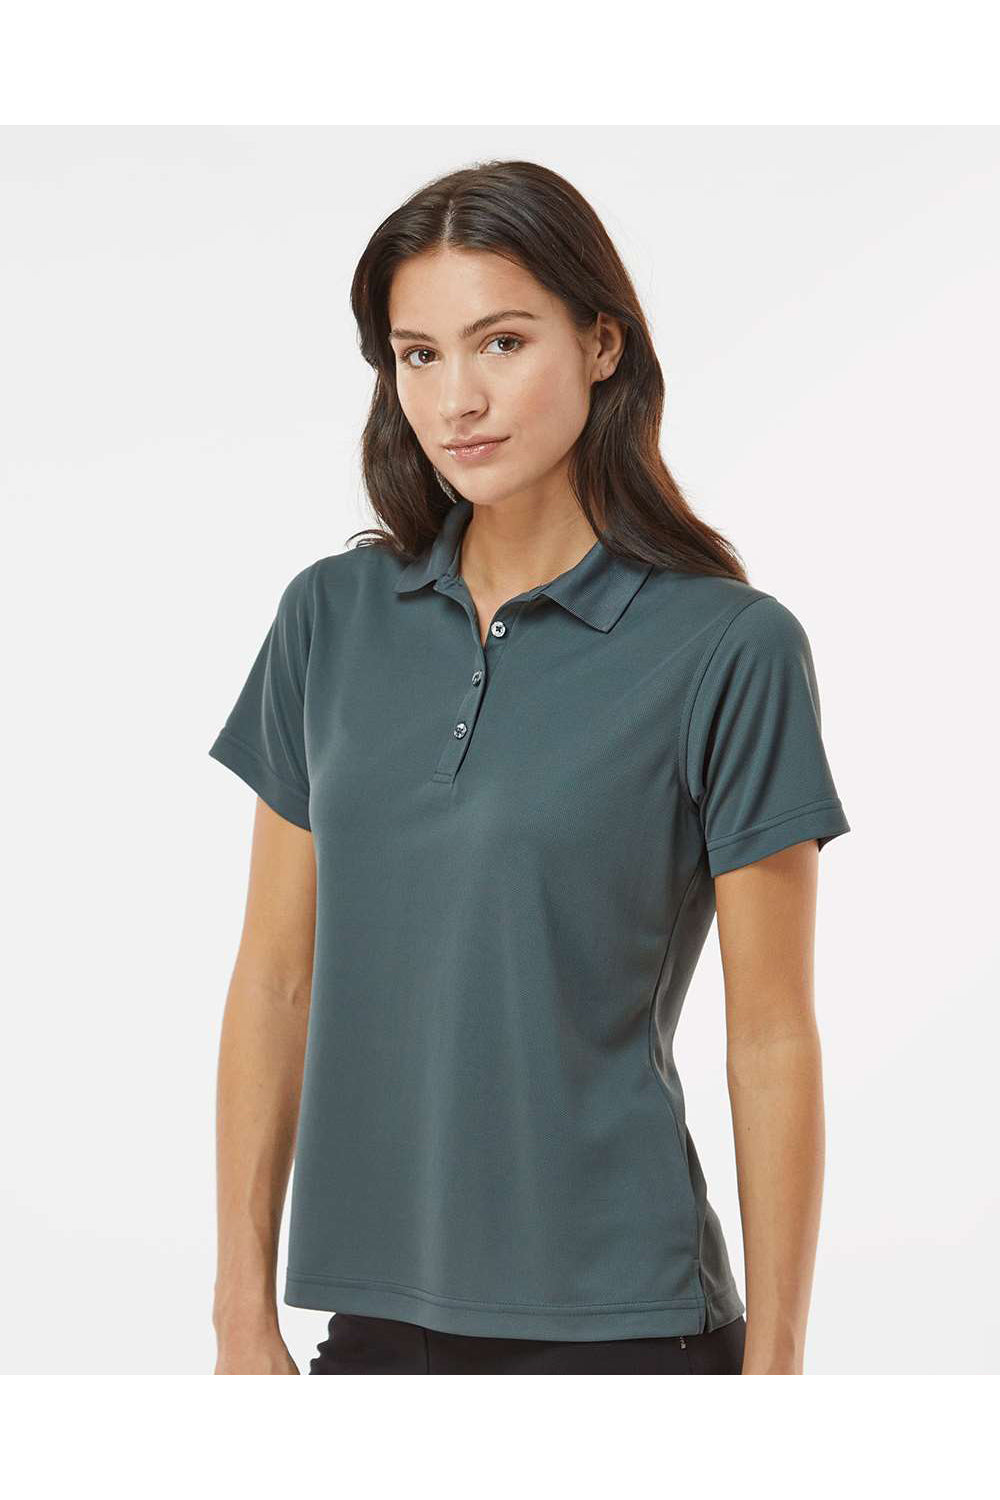 Paragon 104 Womens Saratoga Performance Mini Mesh Short Sleeve Polo Shirt Carbon Grey Model Side